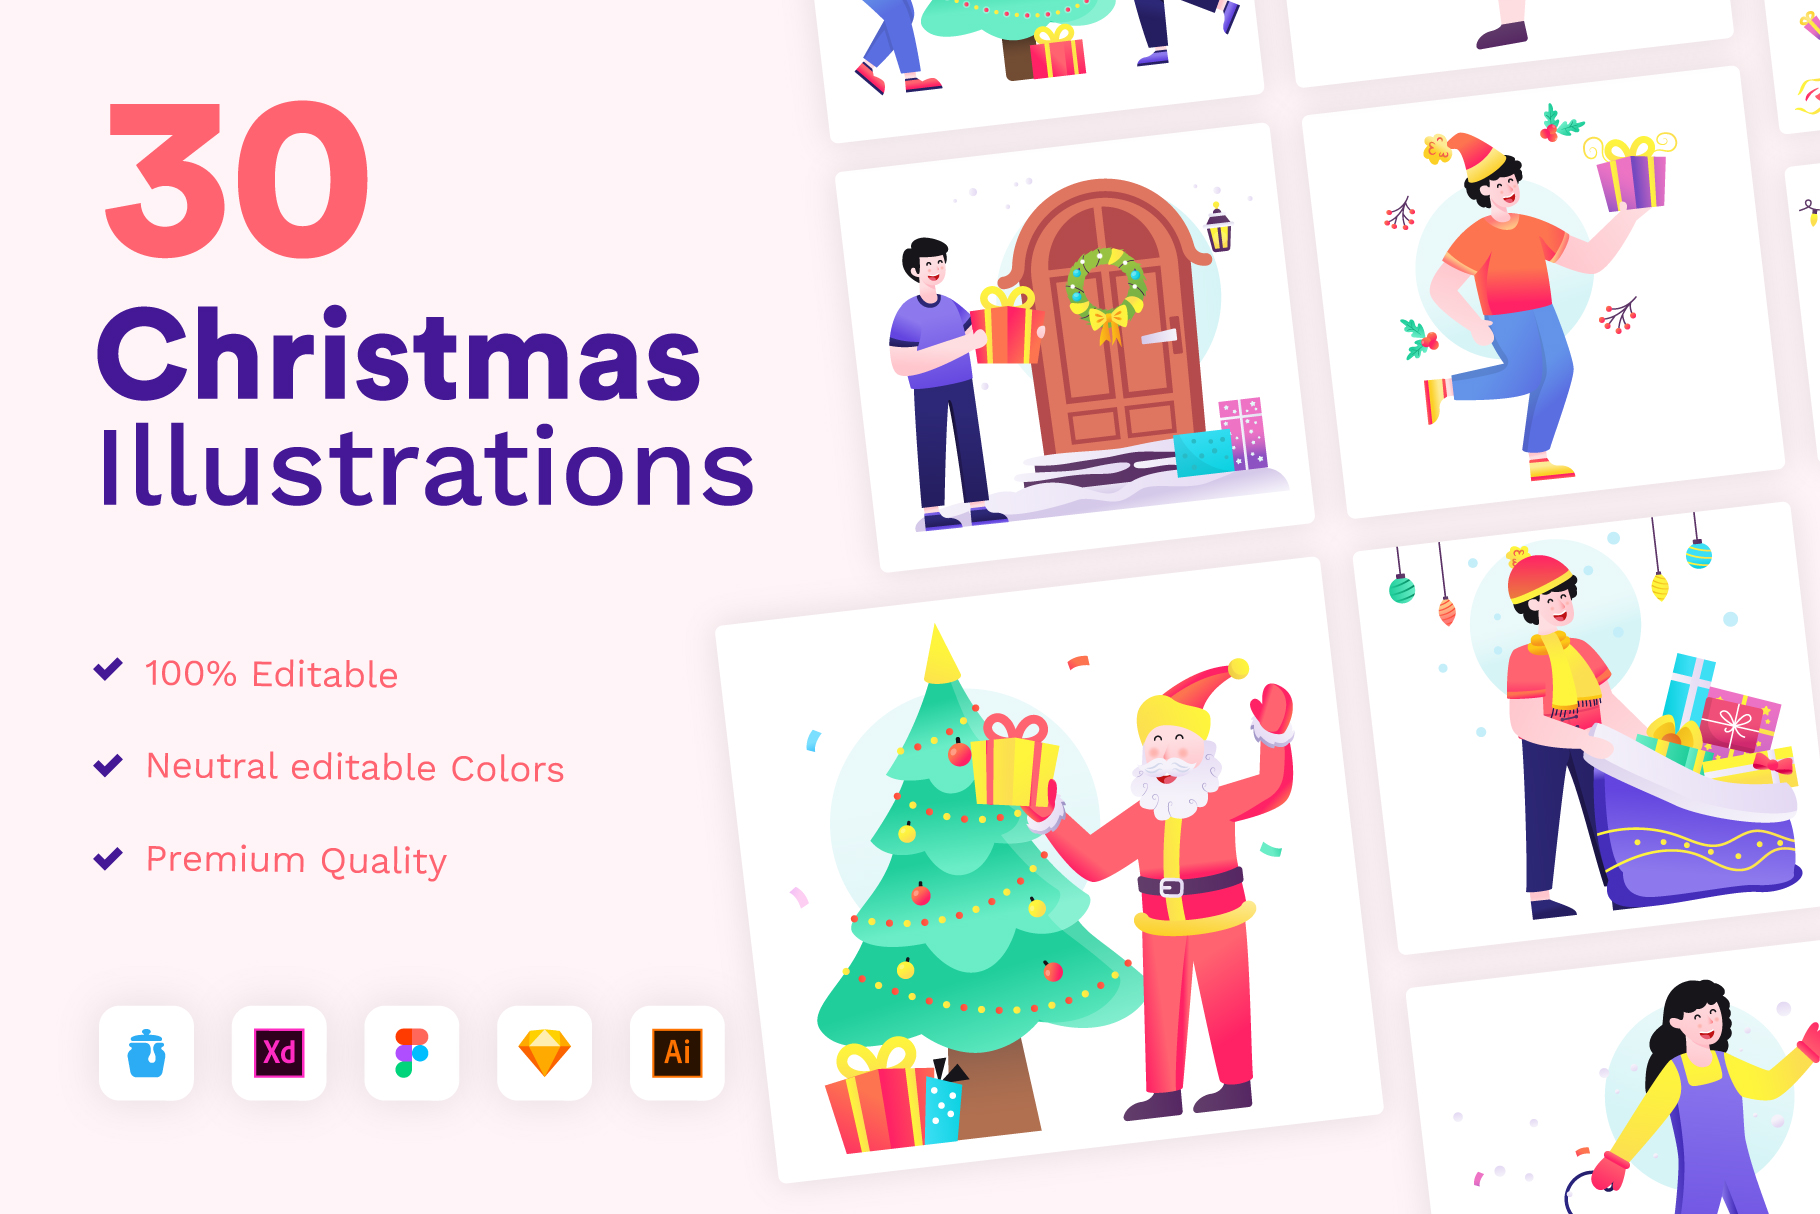 30 Christmas Illustrations